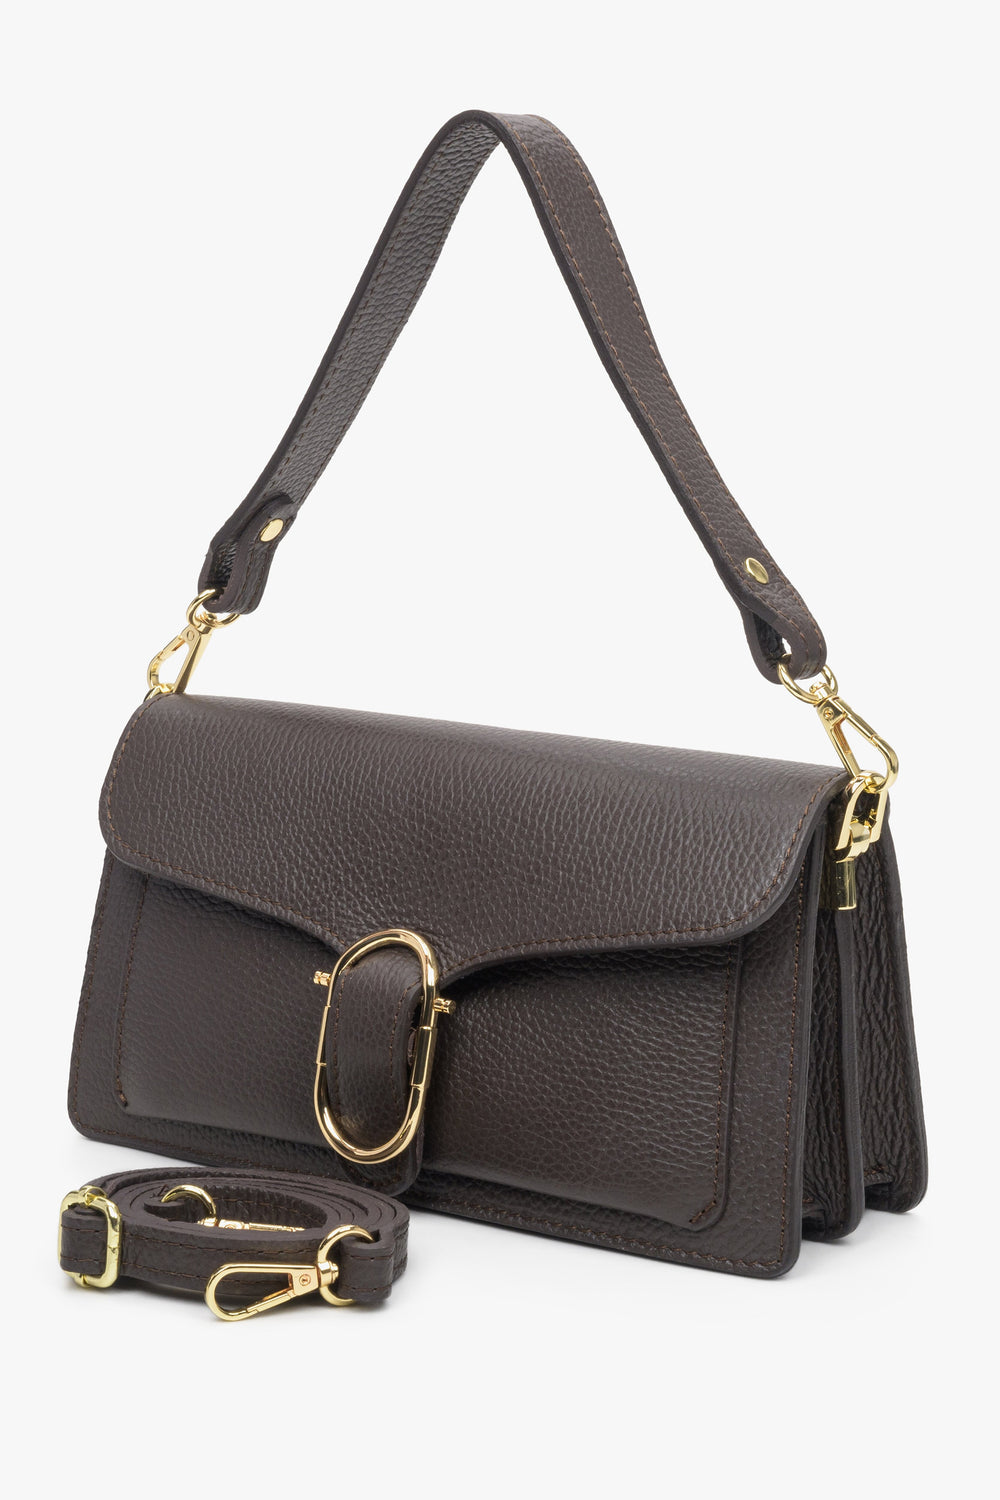 Small dark brown women's Estro handbag made of Italian natural leather.